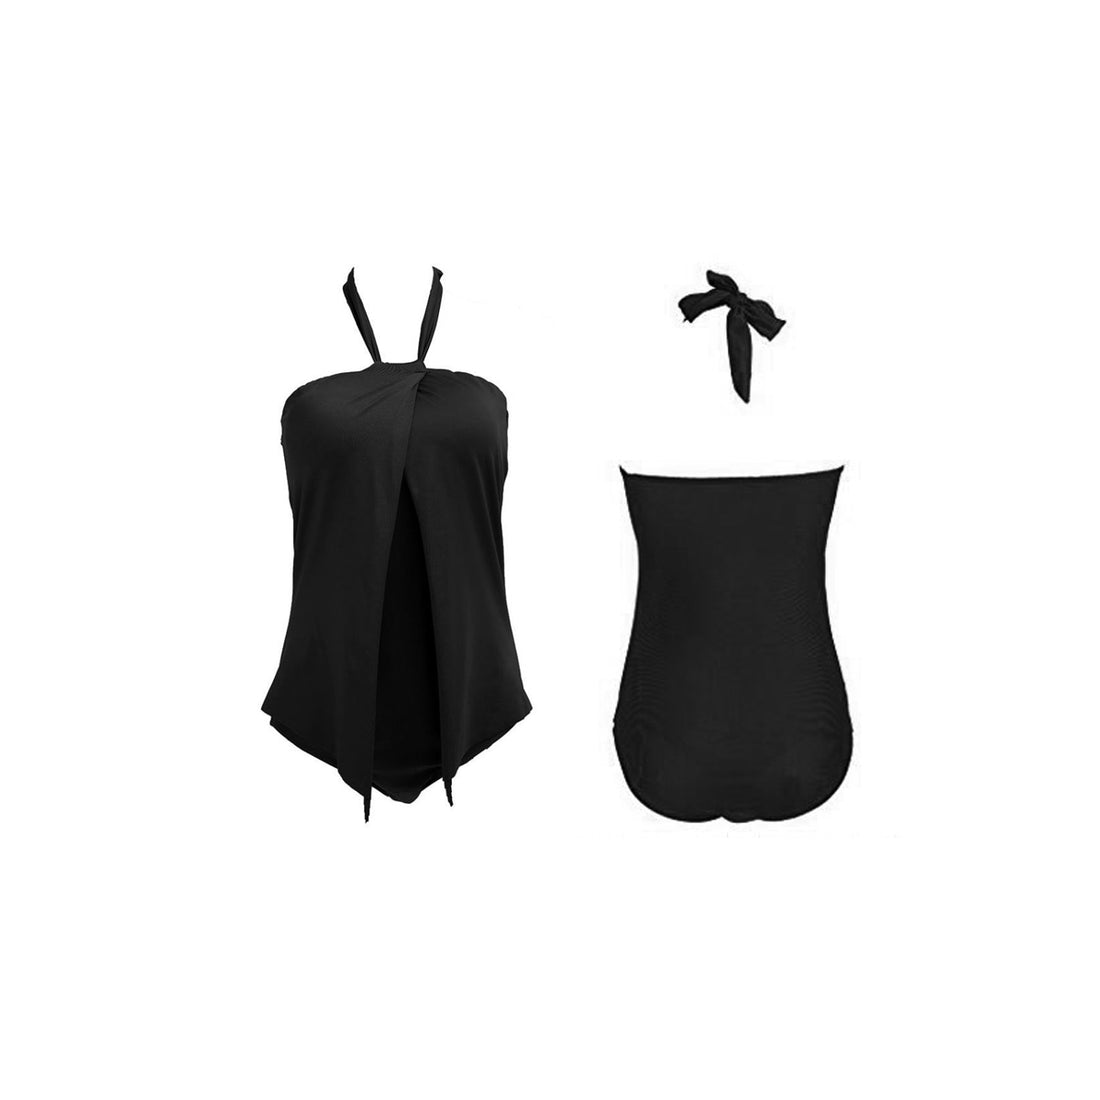 Plus Size Fashion One Piece Swimsuit - Black, Blue or Gray